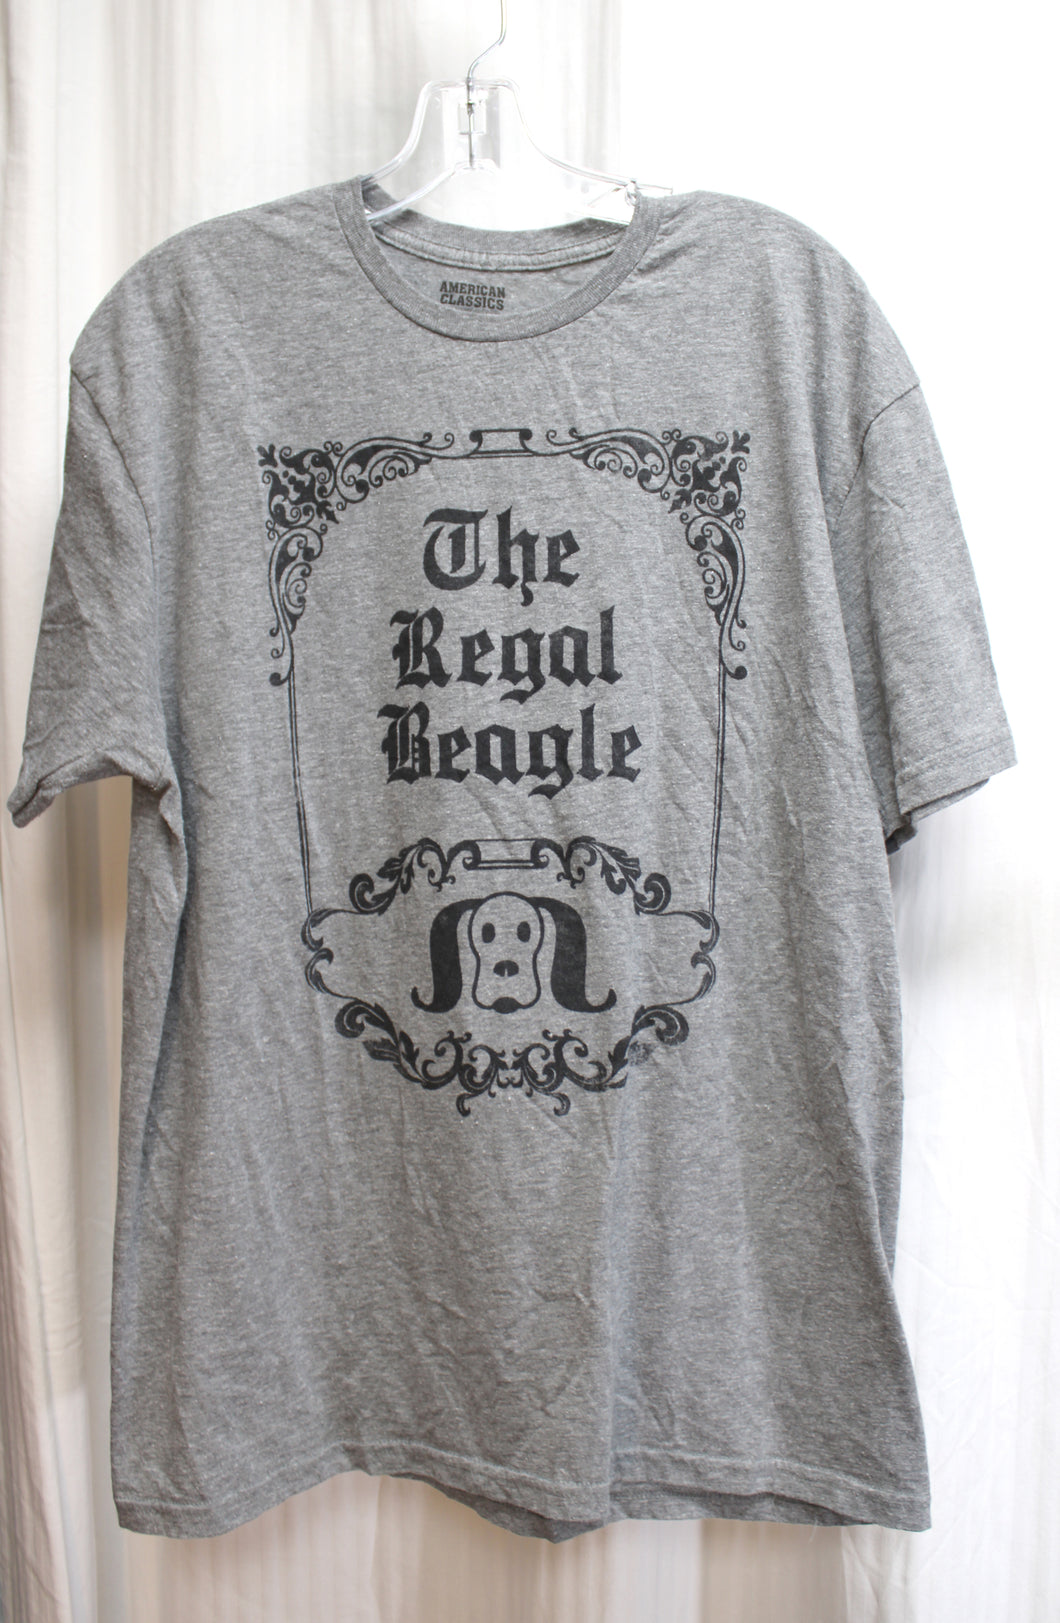 American Classics - The Regal Beagle (Three's Company) Gray Heathered T-Shirt - Size XL